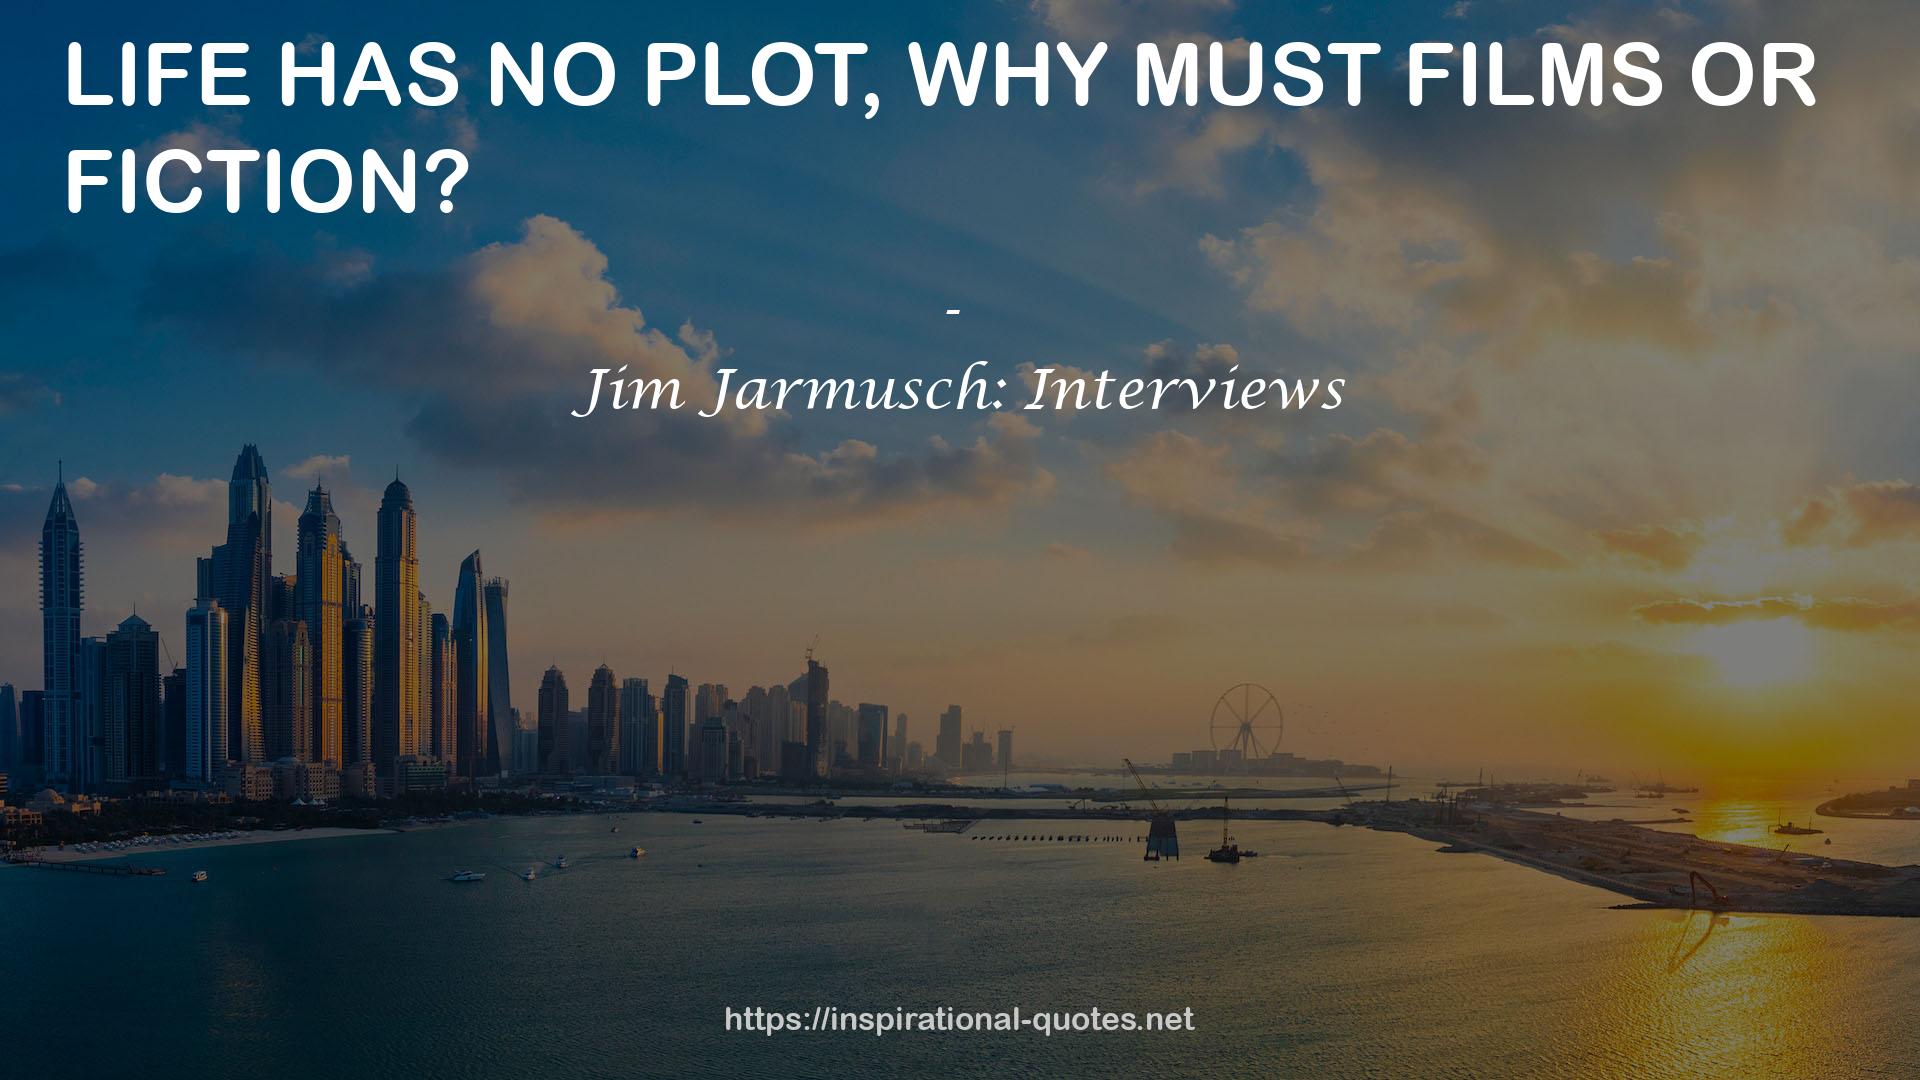 Jim Jarmusch: Interviews QUOTES